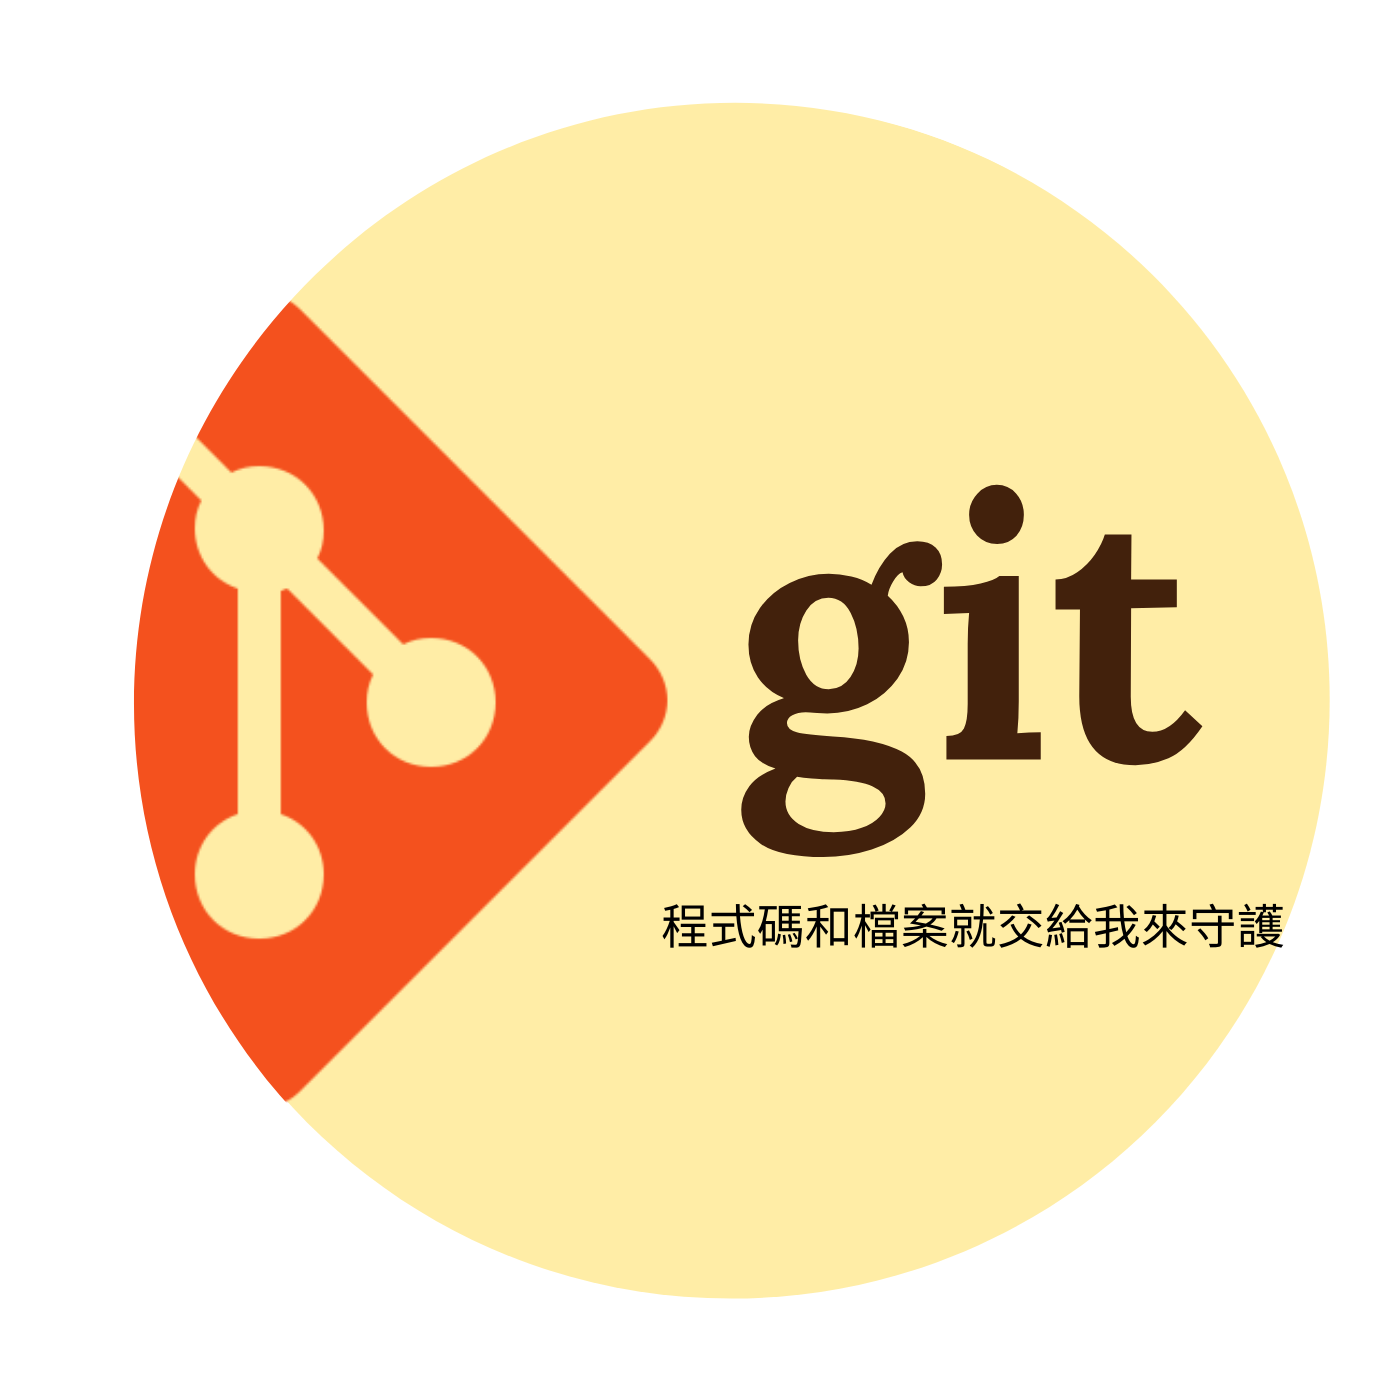 Git Commit Message 這樣寫會更好，替專案引入規範與範例